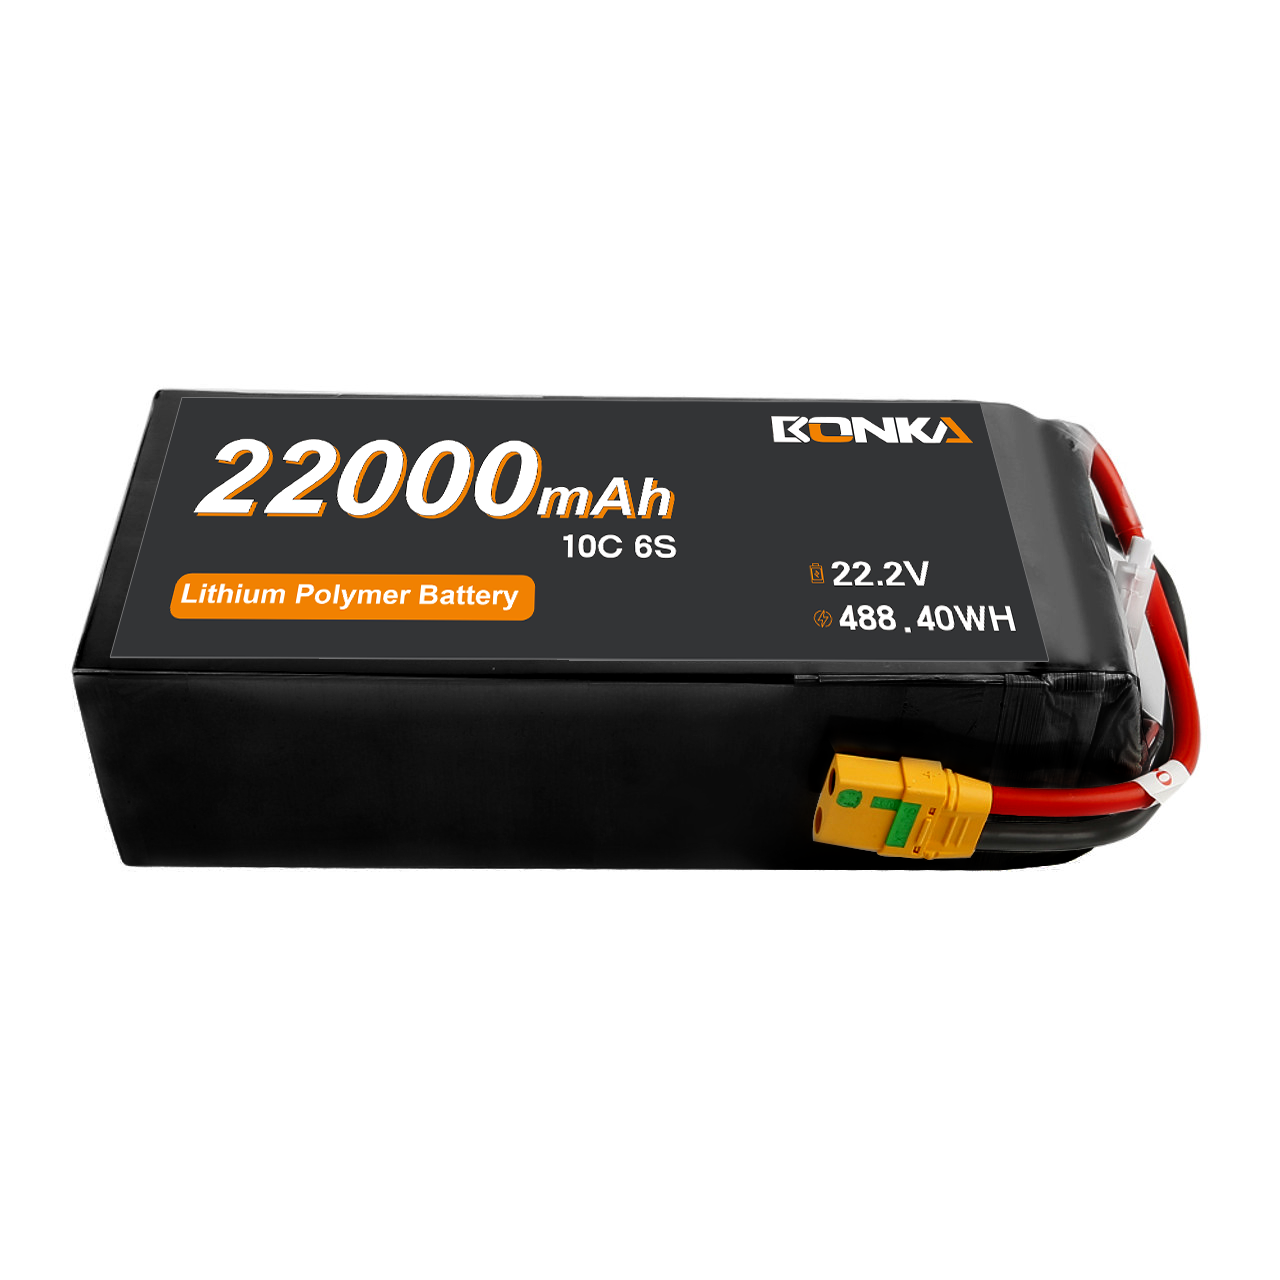 BONKA 22000mAh 10C 6S Semi Solid Li-Ion Battery